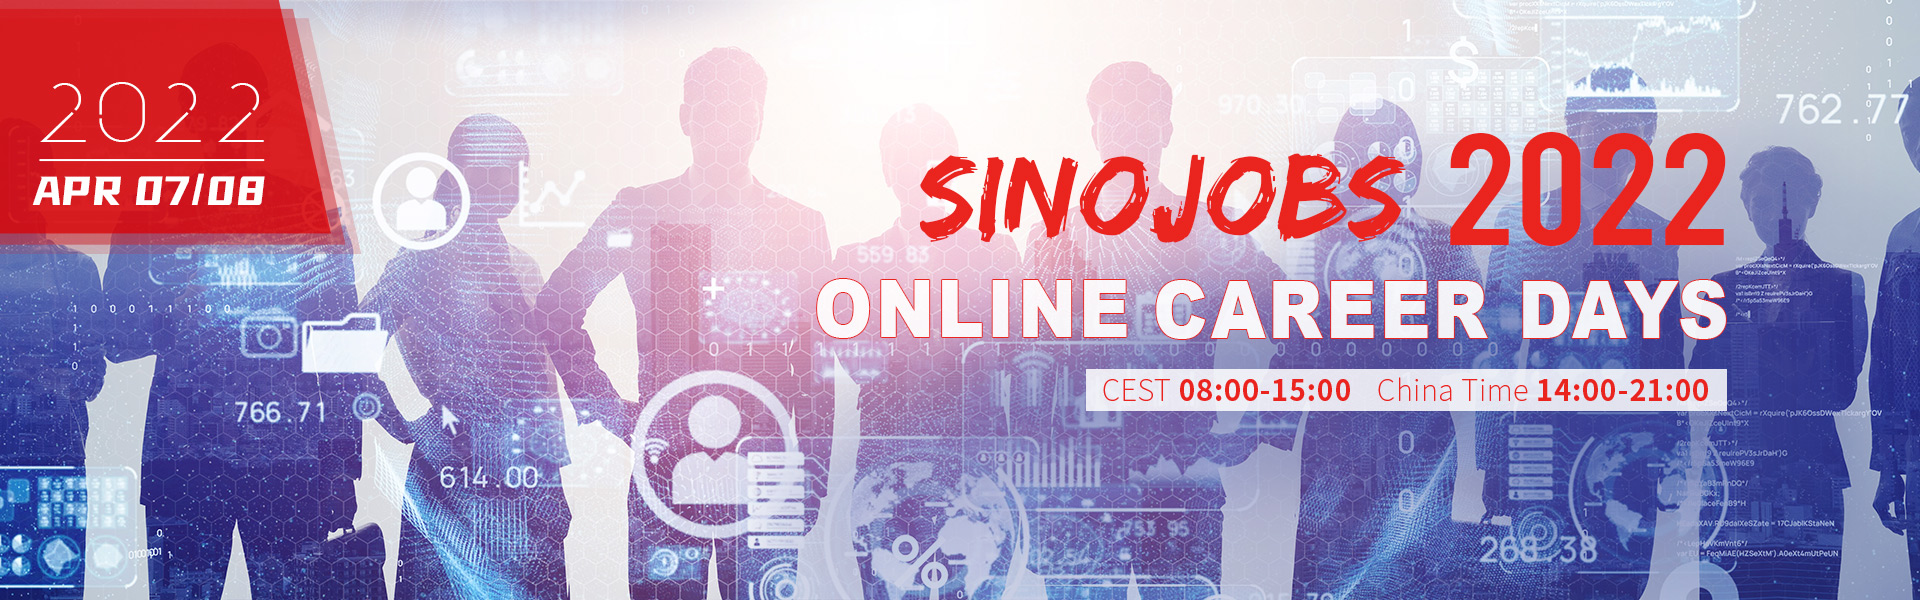 SinoJobs GmbH